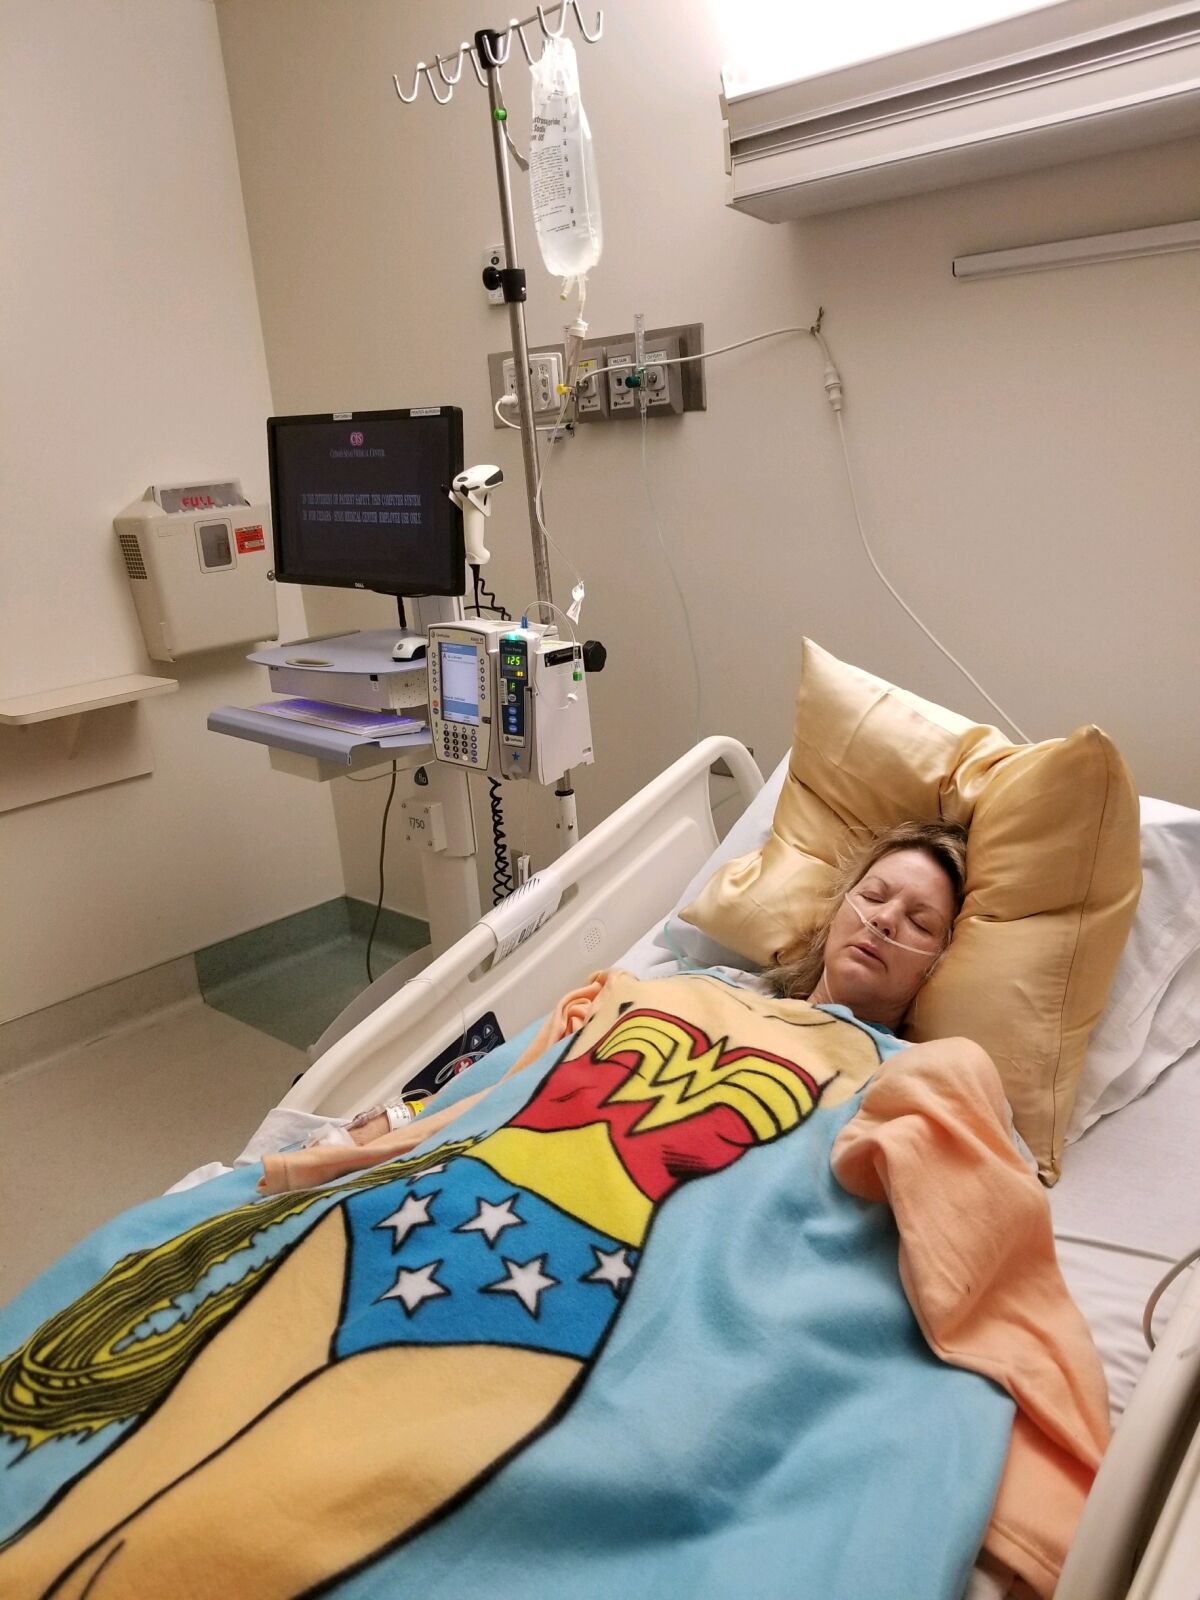 Heidi Miller in hospital bed at Cedars-Sinai awaiting transplant surgery.